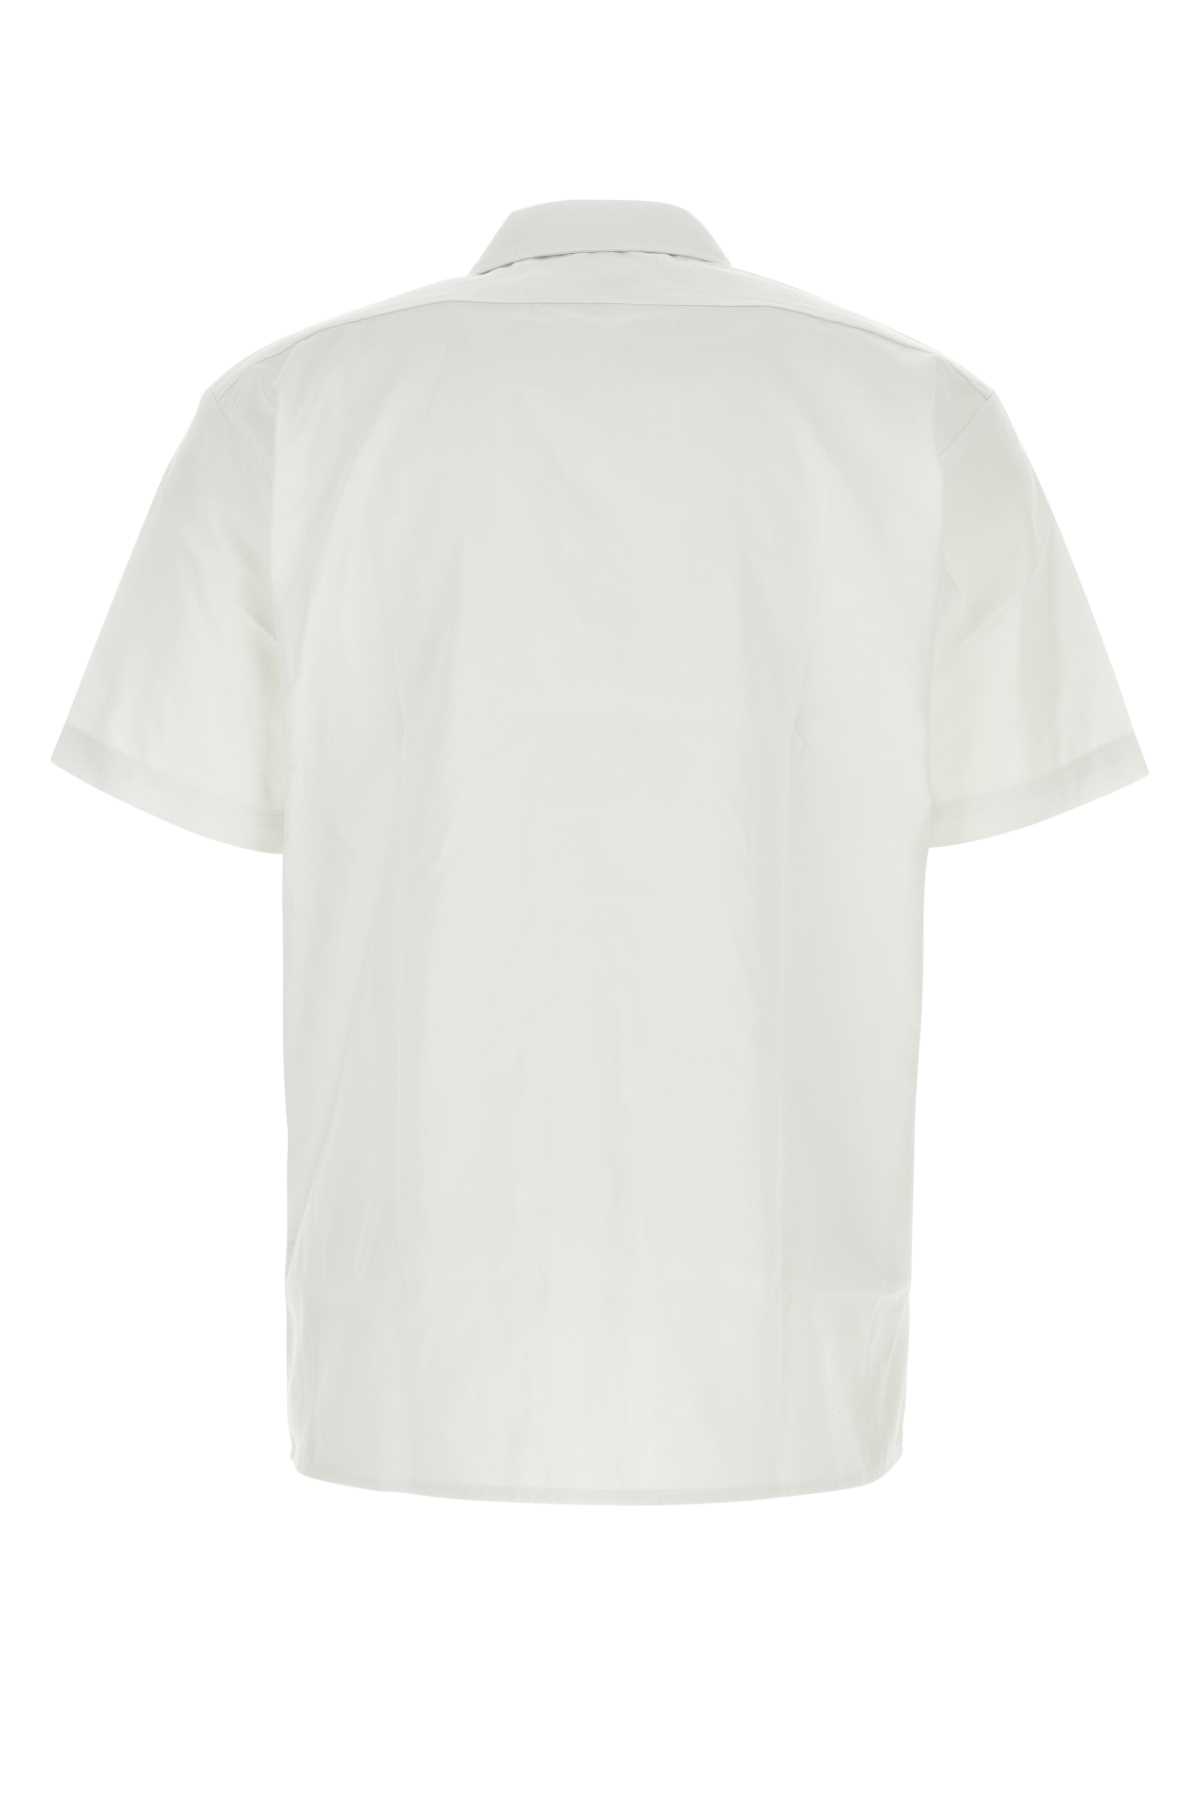 Dickies White Polyester Blend Shirt